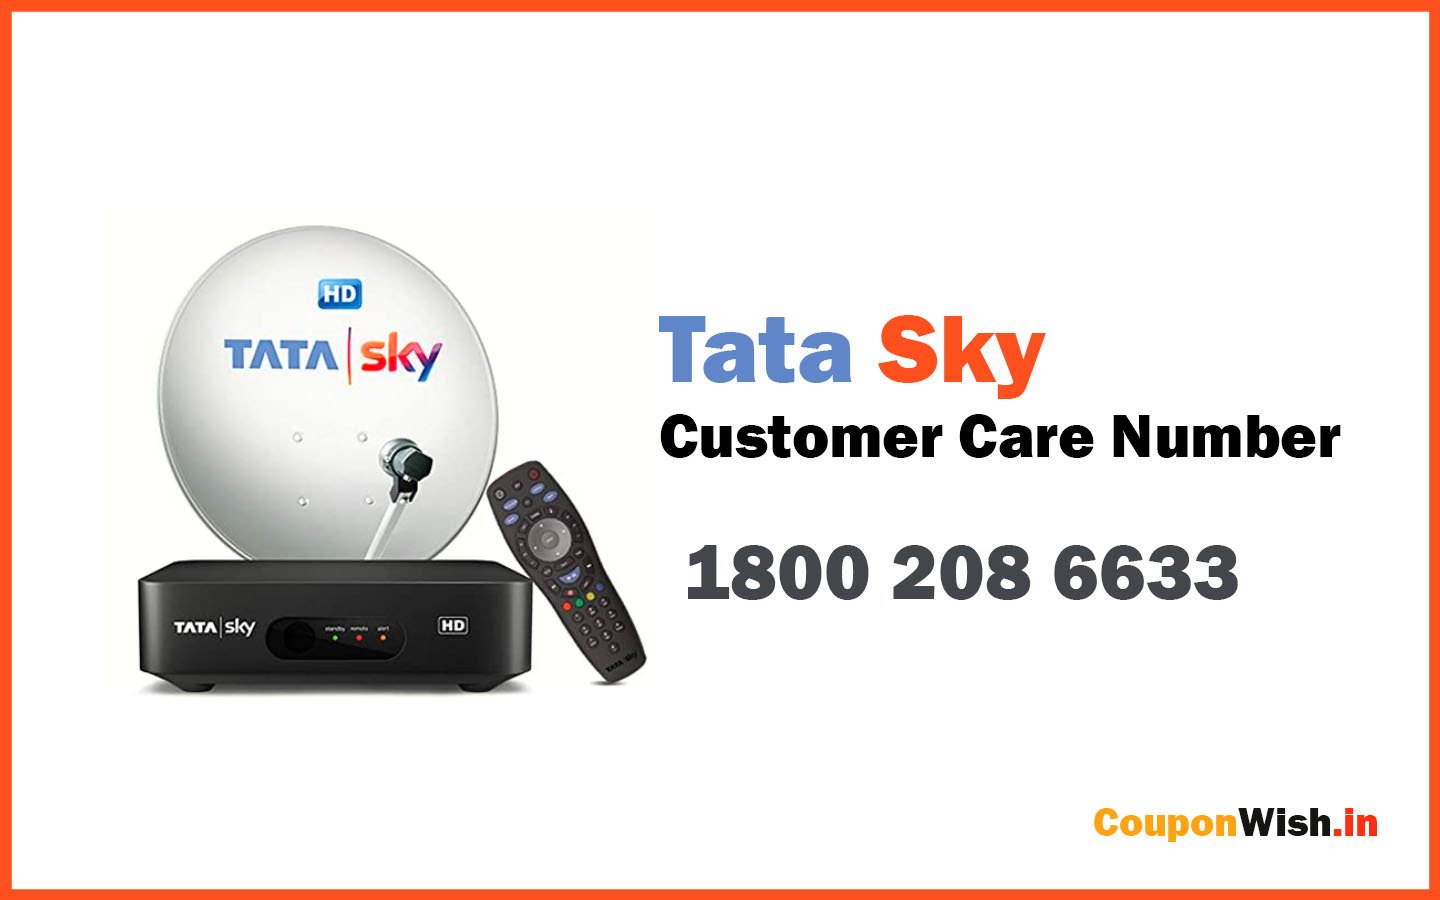 Tata Sky Customer Care Number, Toll Free Number, 24x7 Helpline Number